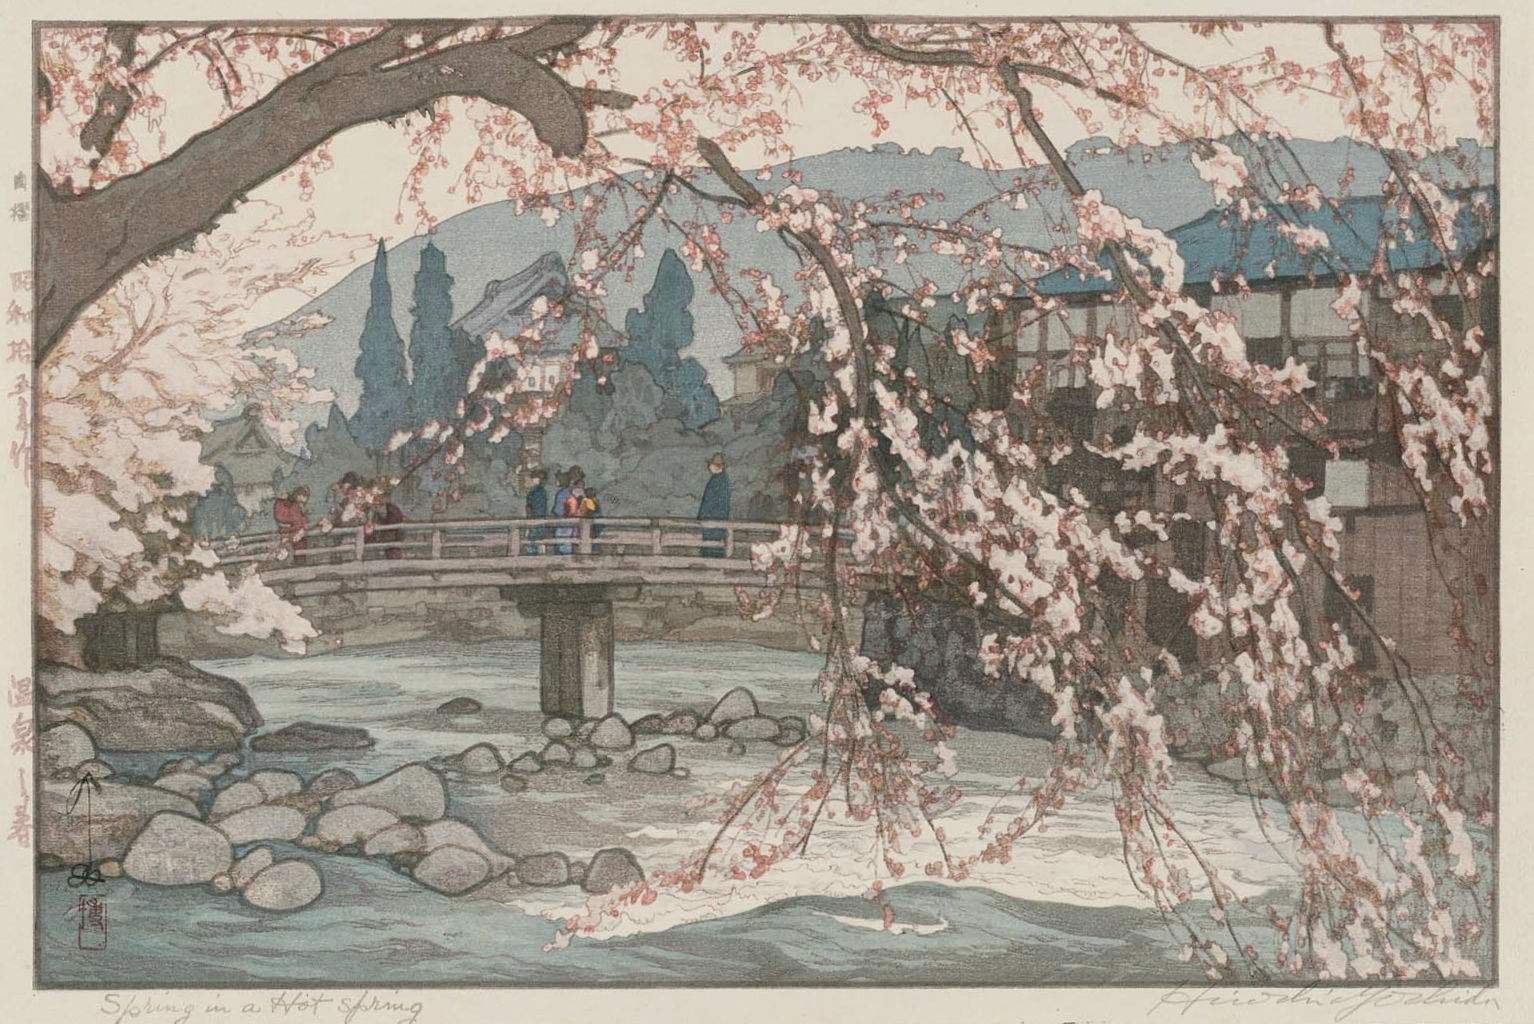 Hiroshi Yoshida “Spring in a Hot Spring” 1940 woodblock print